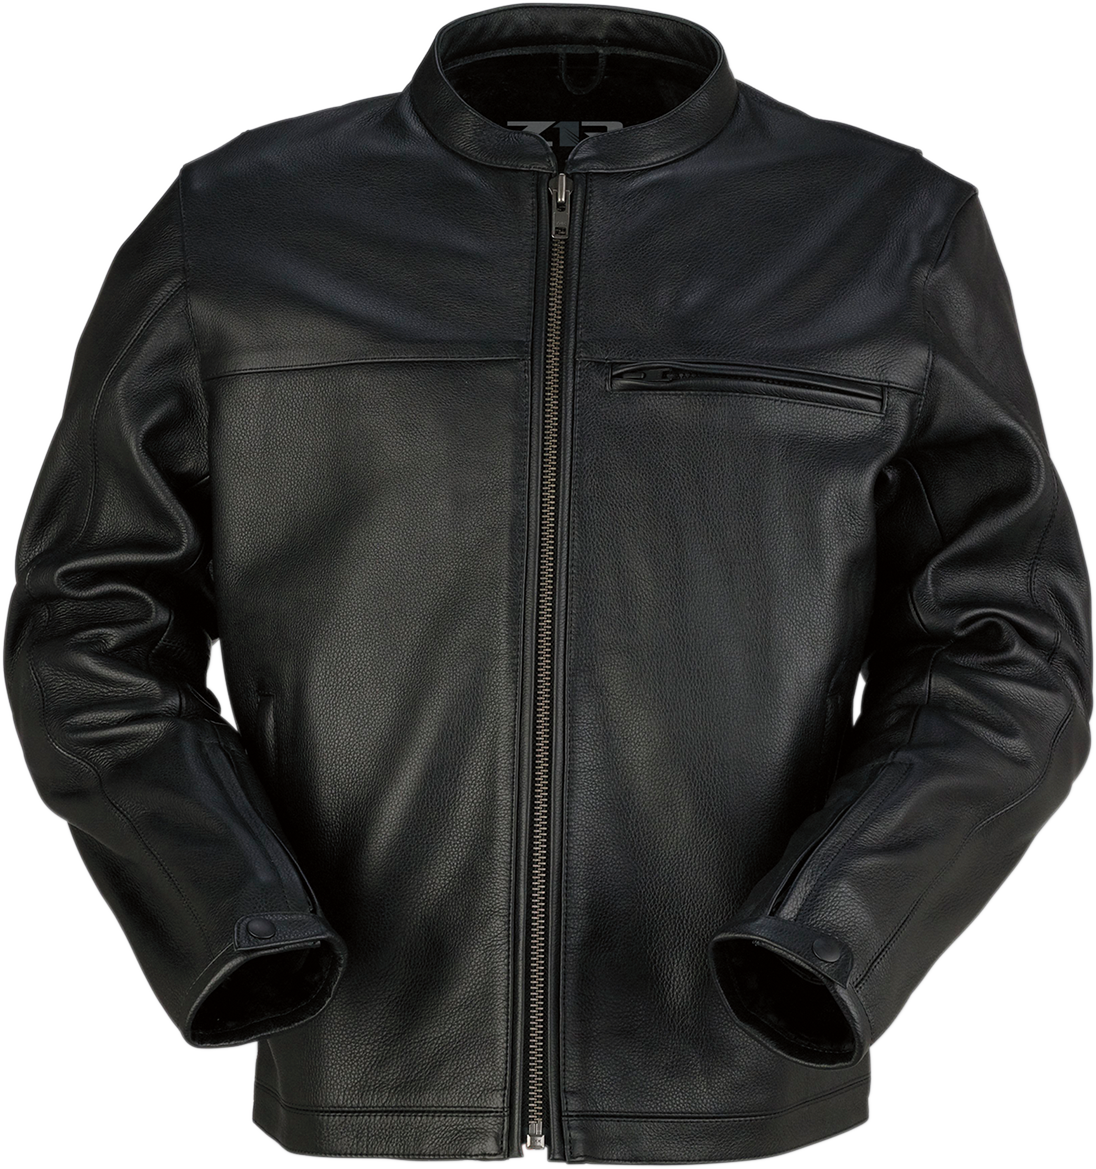 Z1R Munition Leather Jacket - Black - 3XL 2810-3486